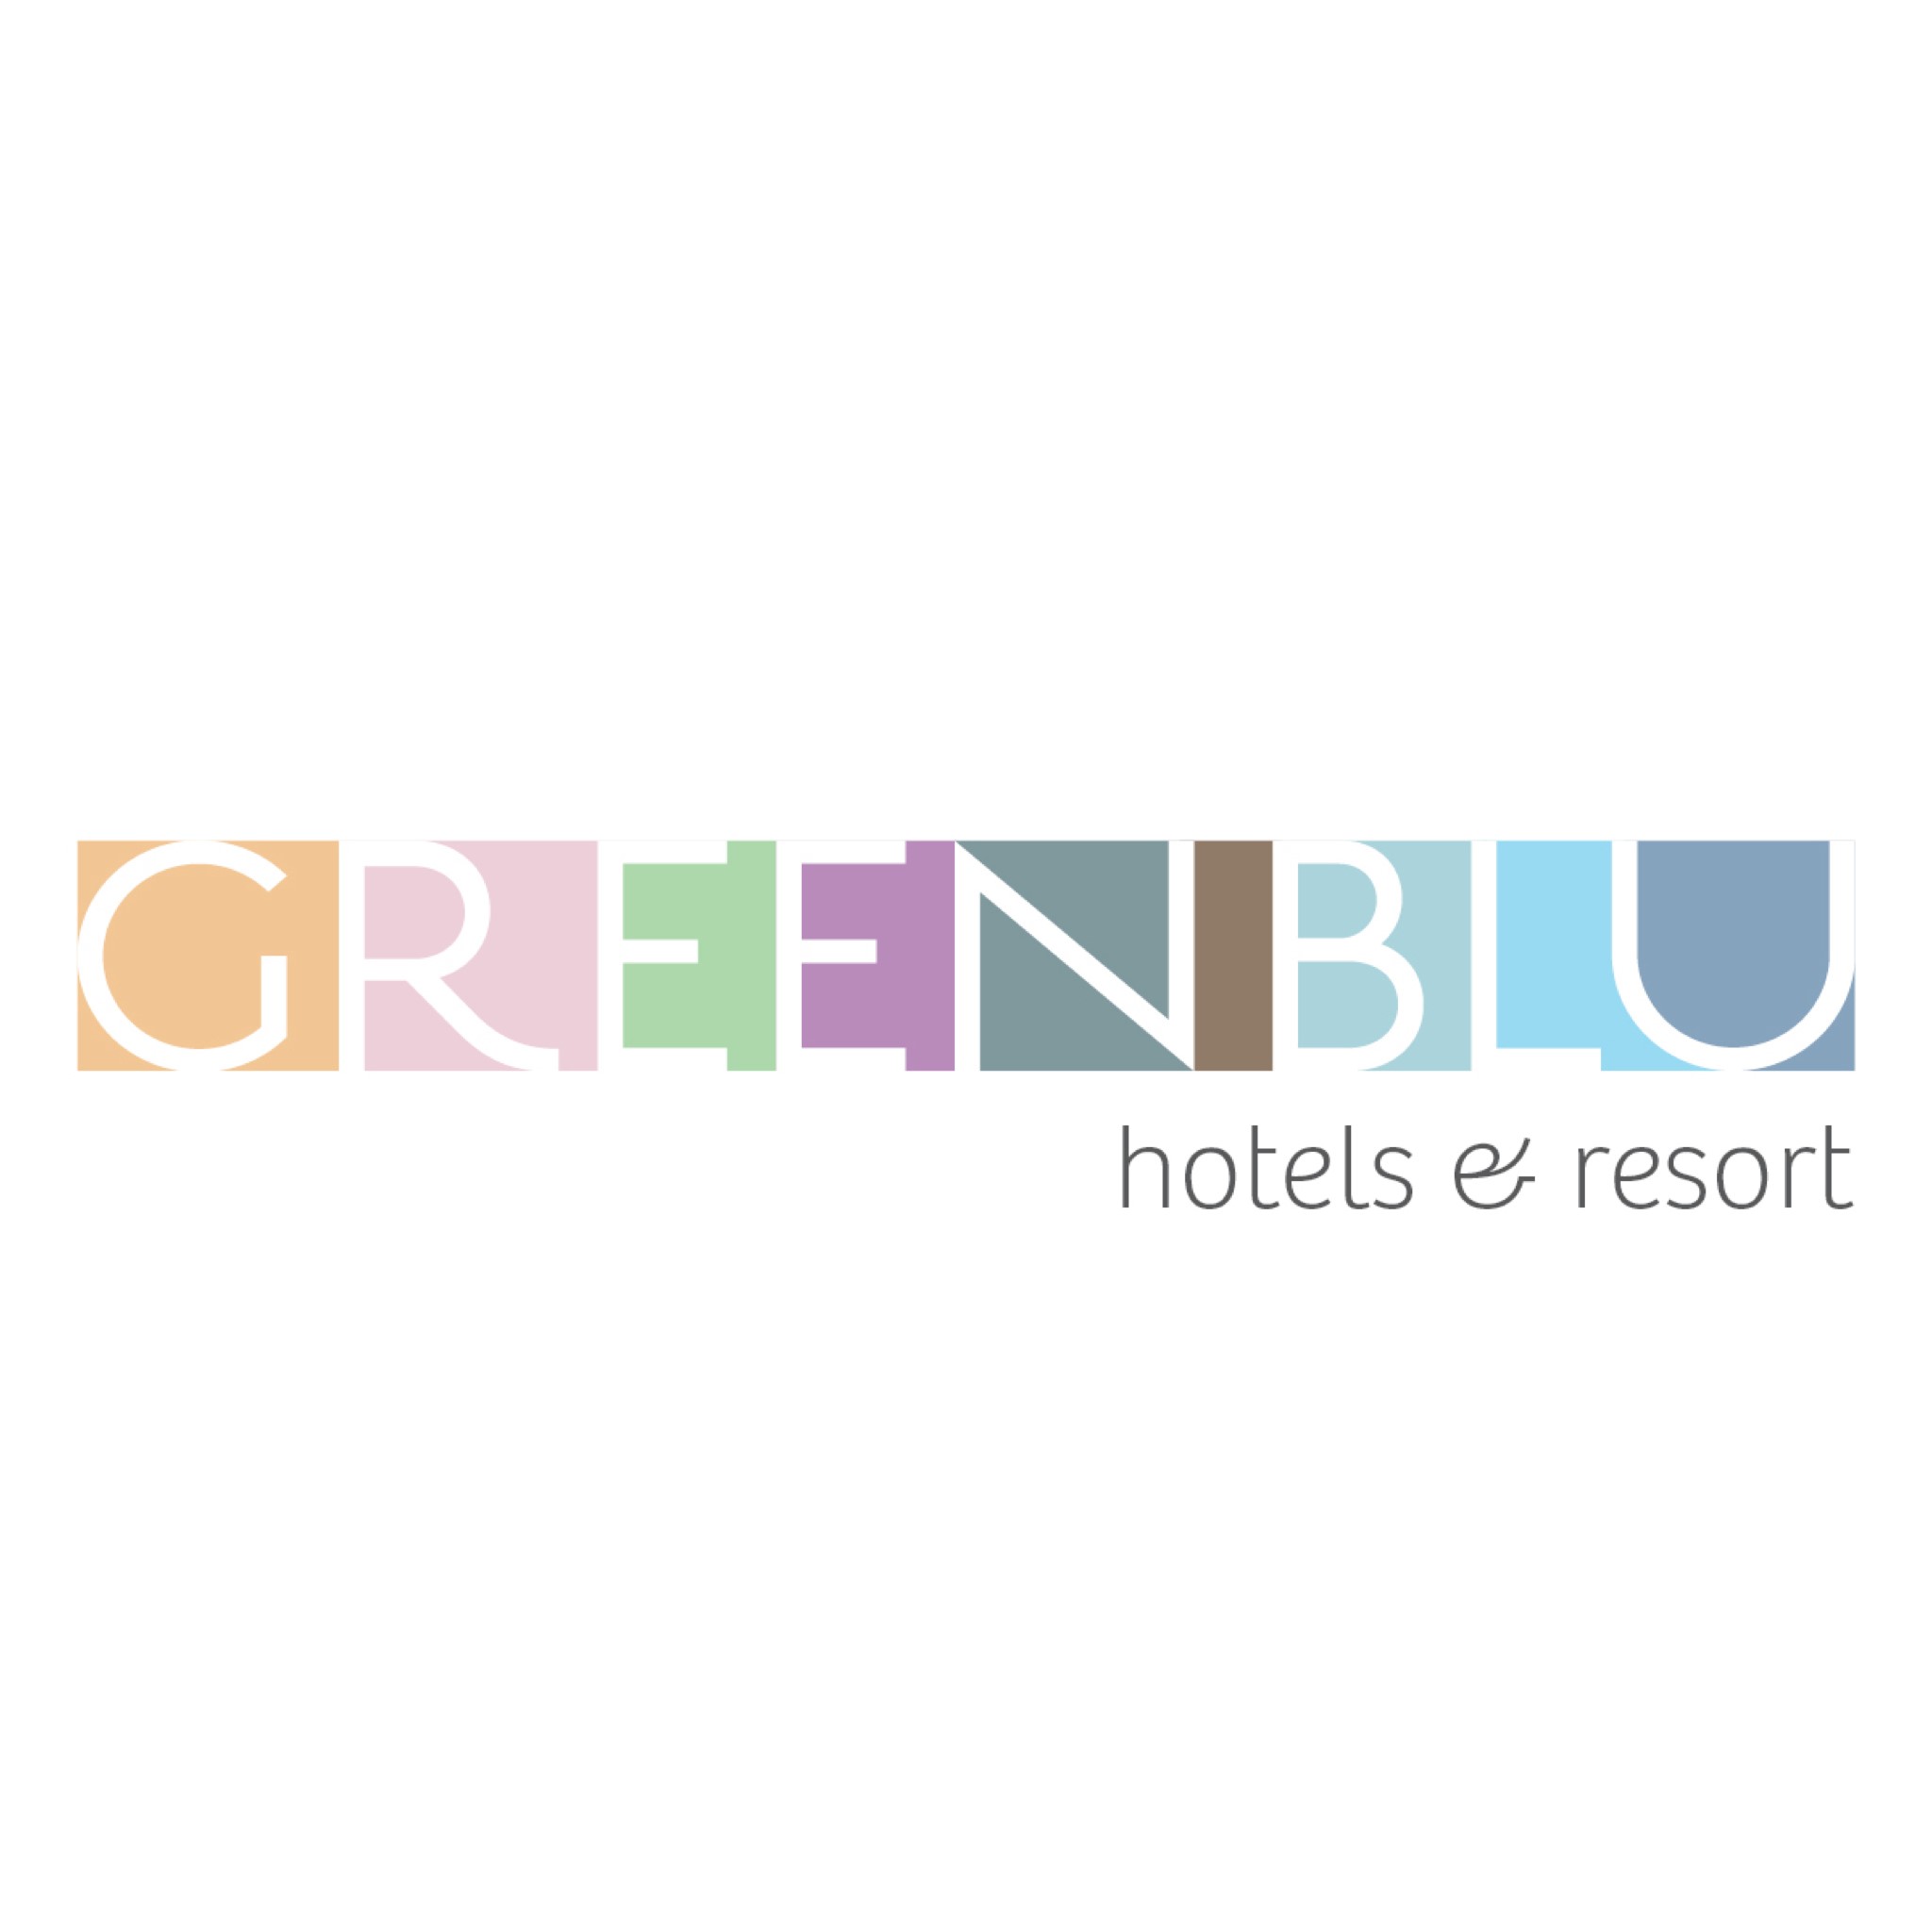 greenblu logo ok